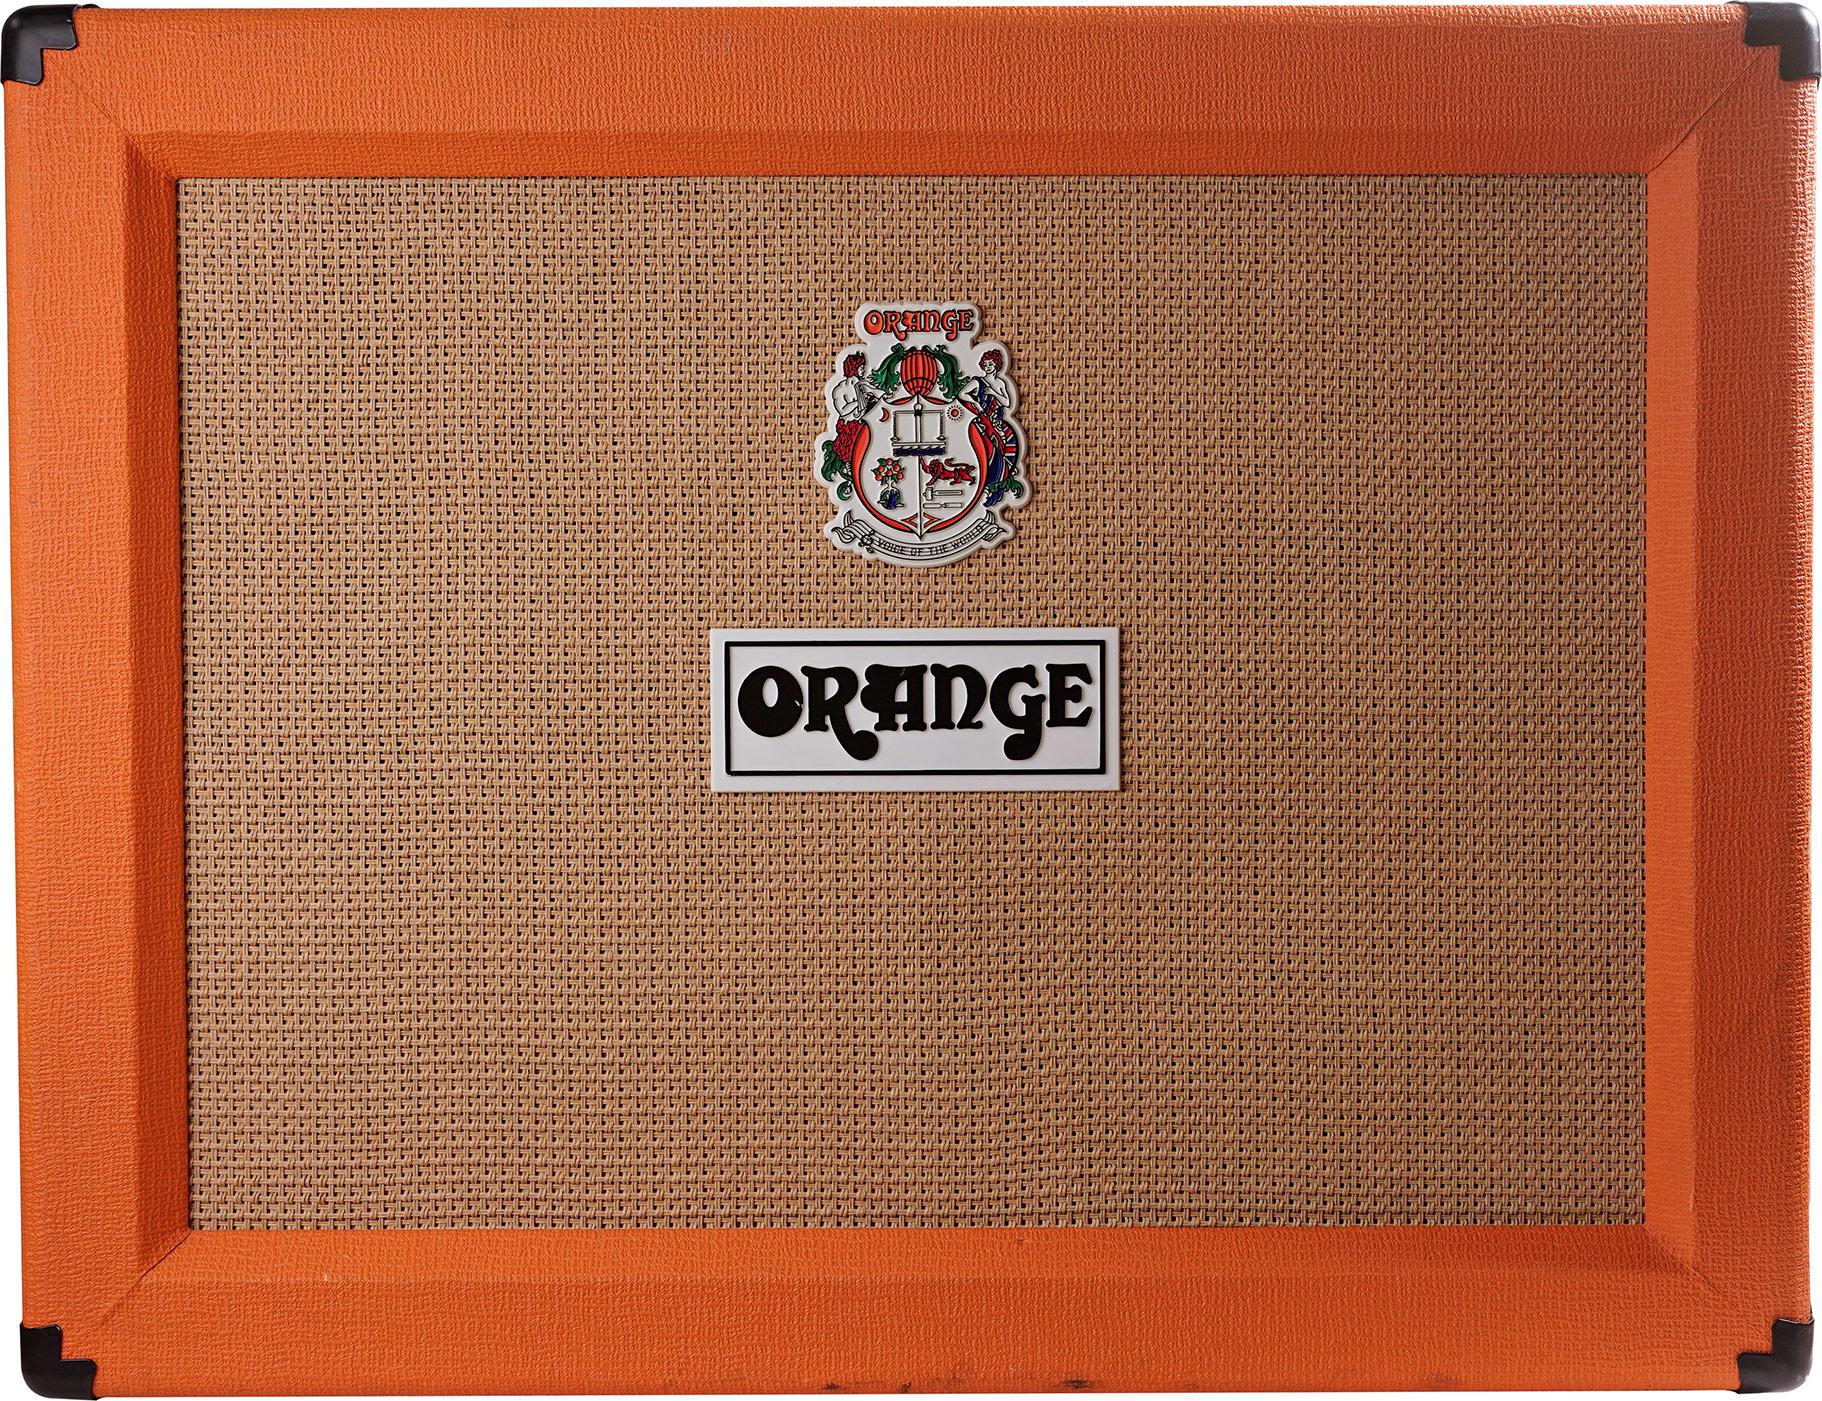 Orange - Bafle para Guitarra Eléctrica, 120 W 2 x 12 Mod.PPC212OB_51